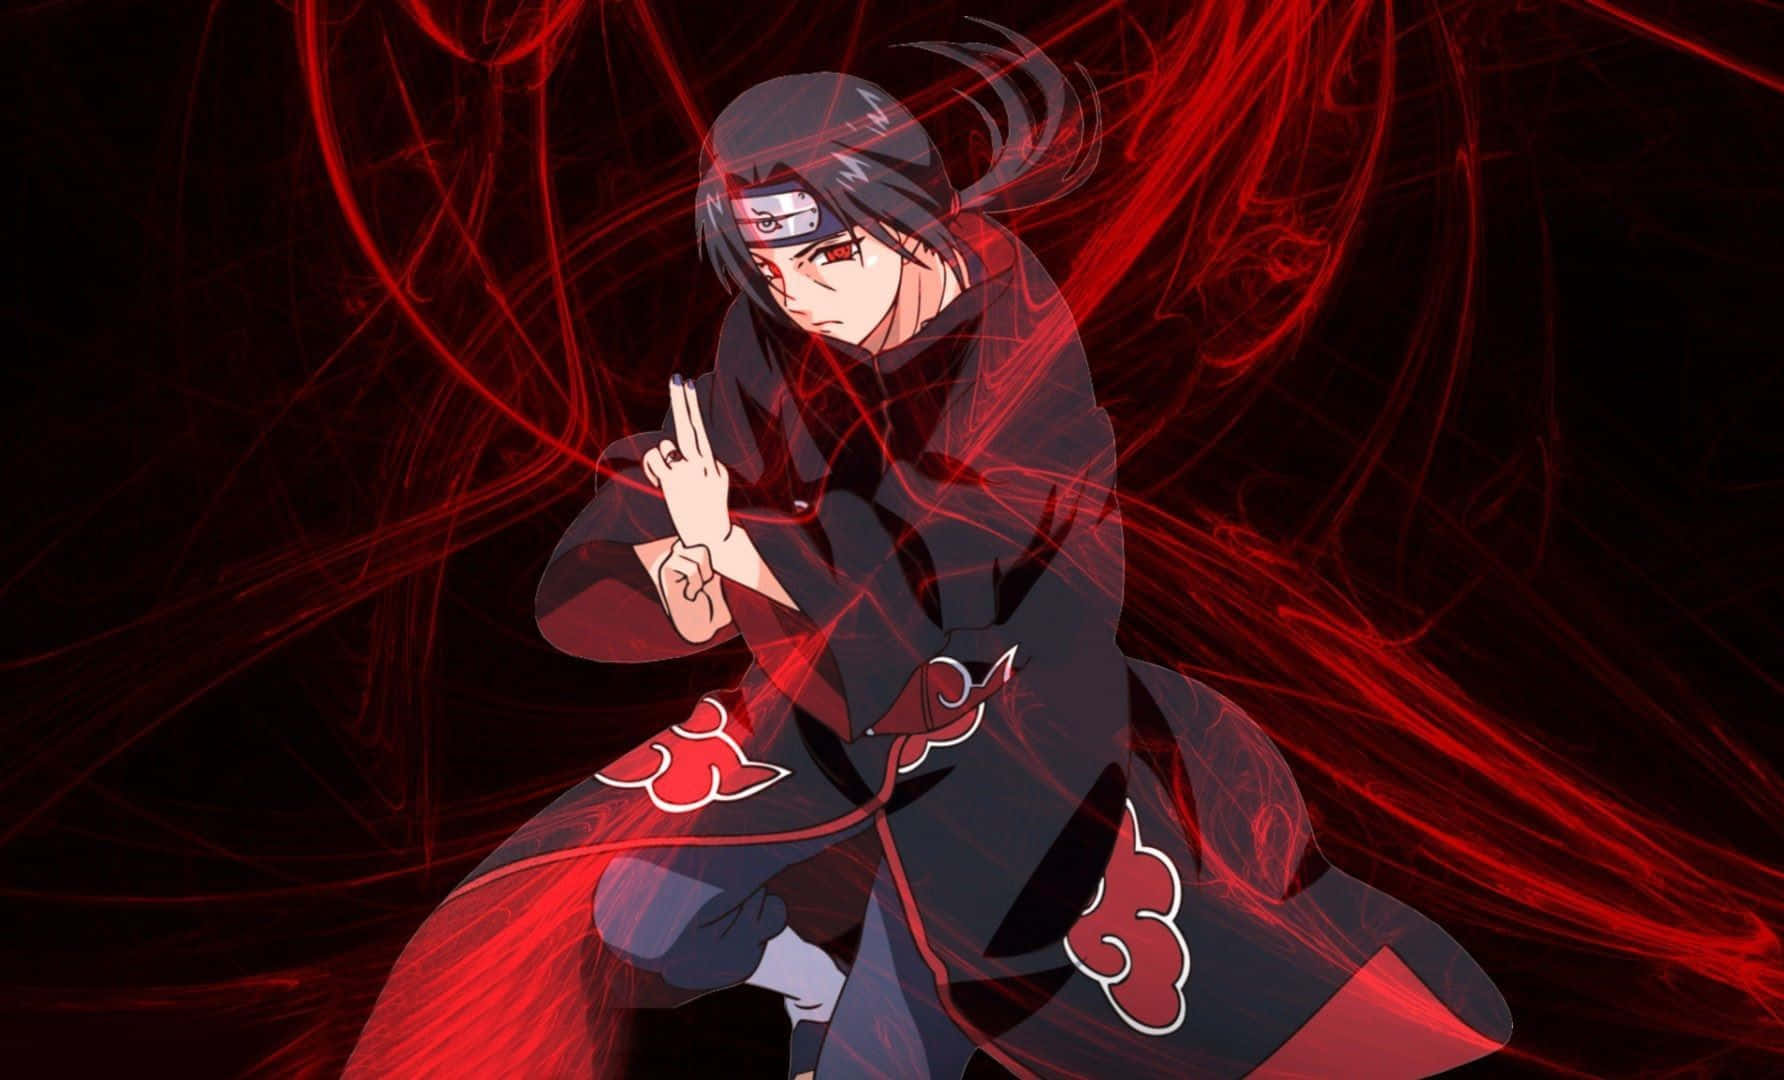 Itachi Uchiha, a powerful ninja in a pensive and serene moment